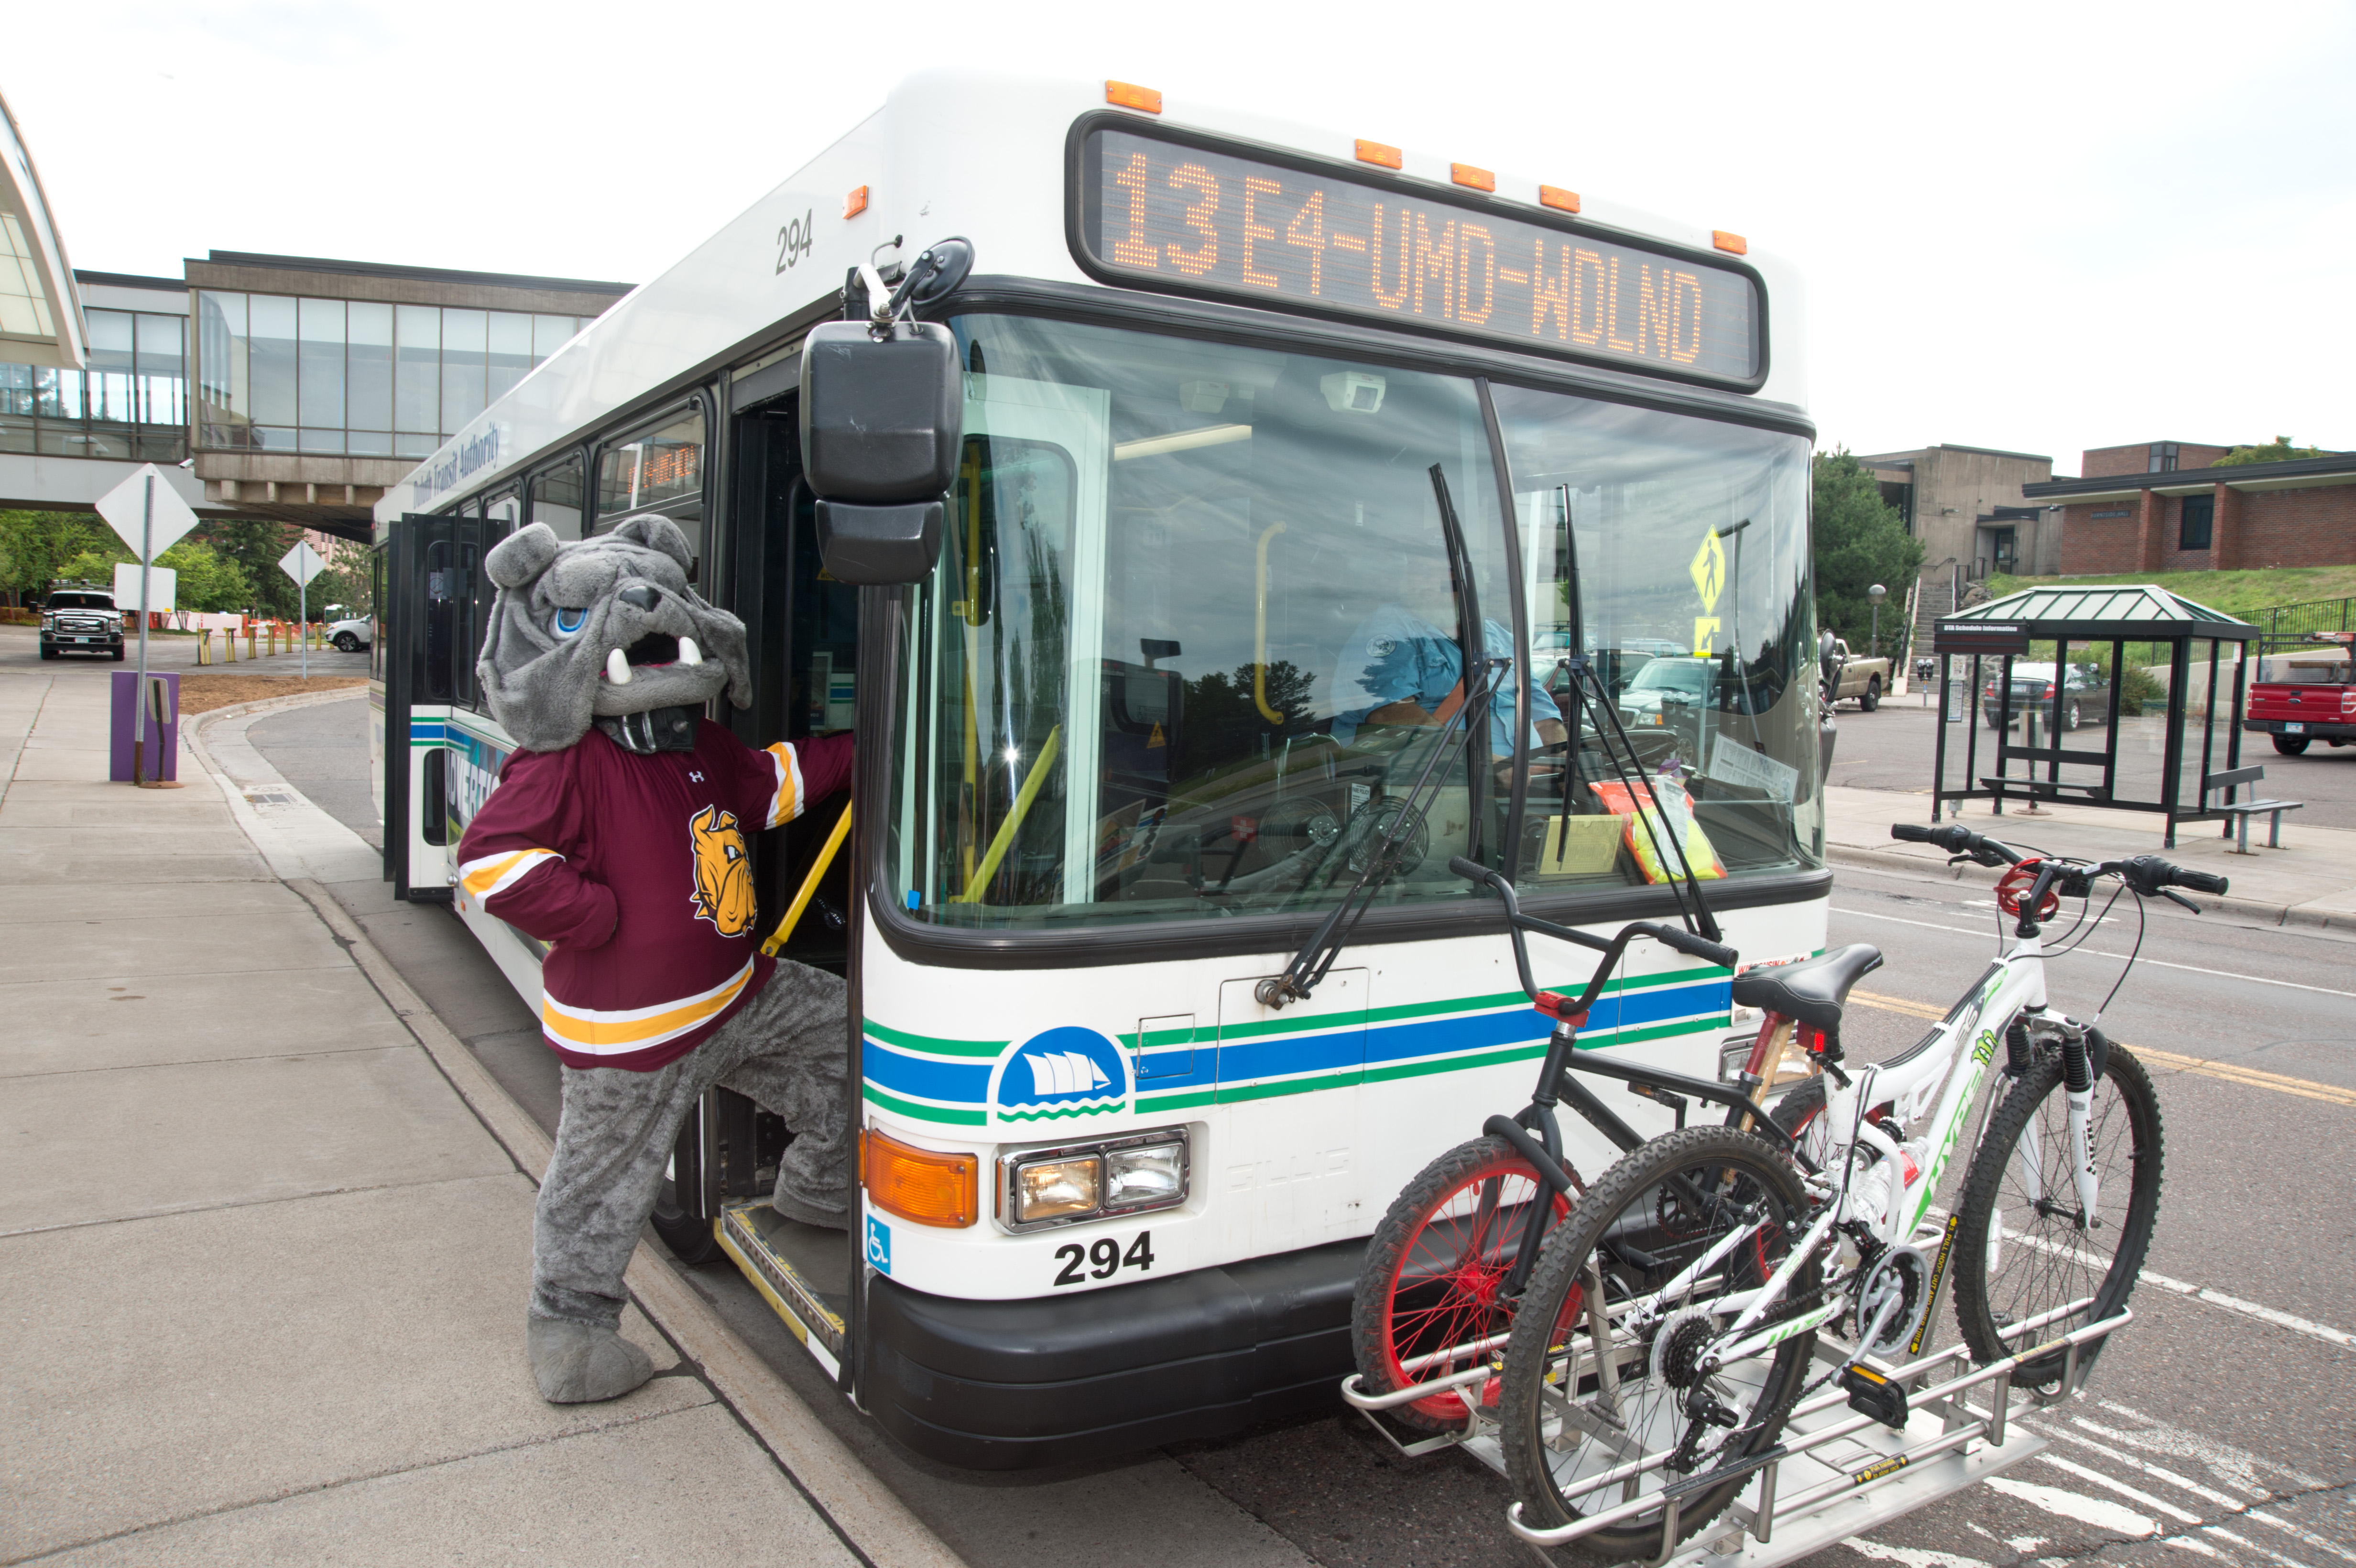 Champ the Bulldog posing next to a DTA bus